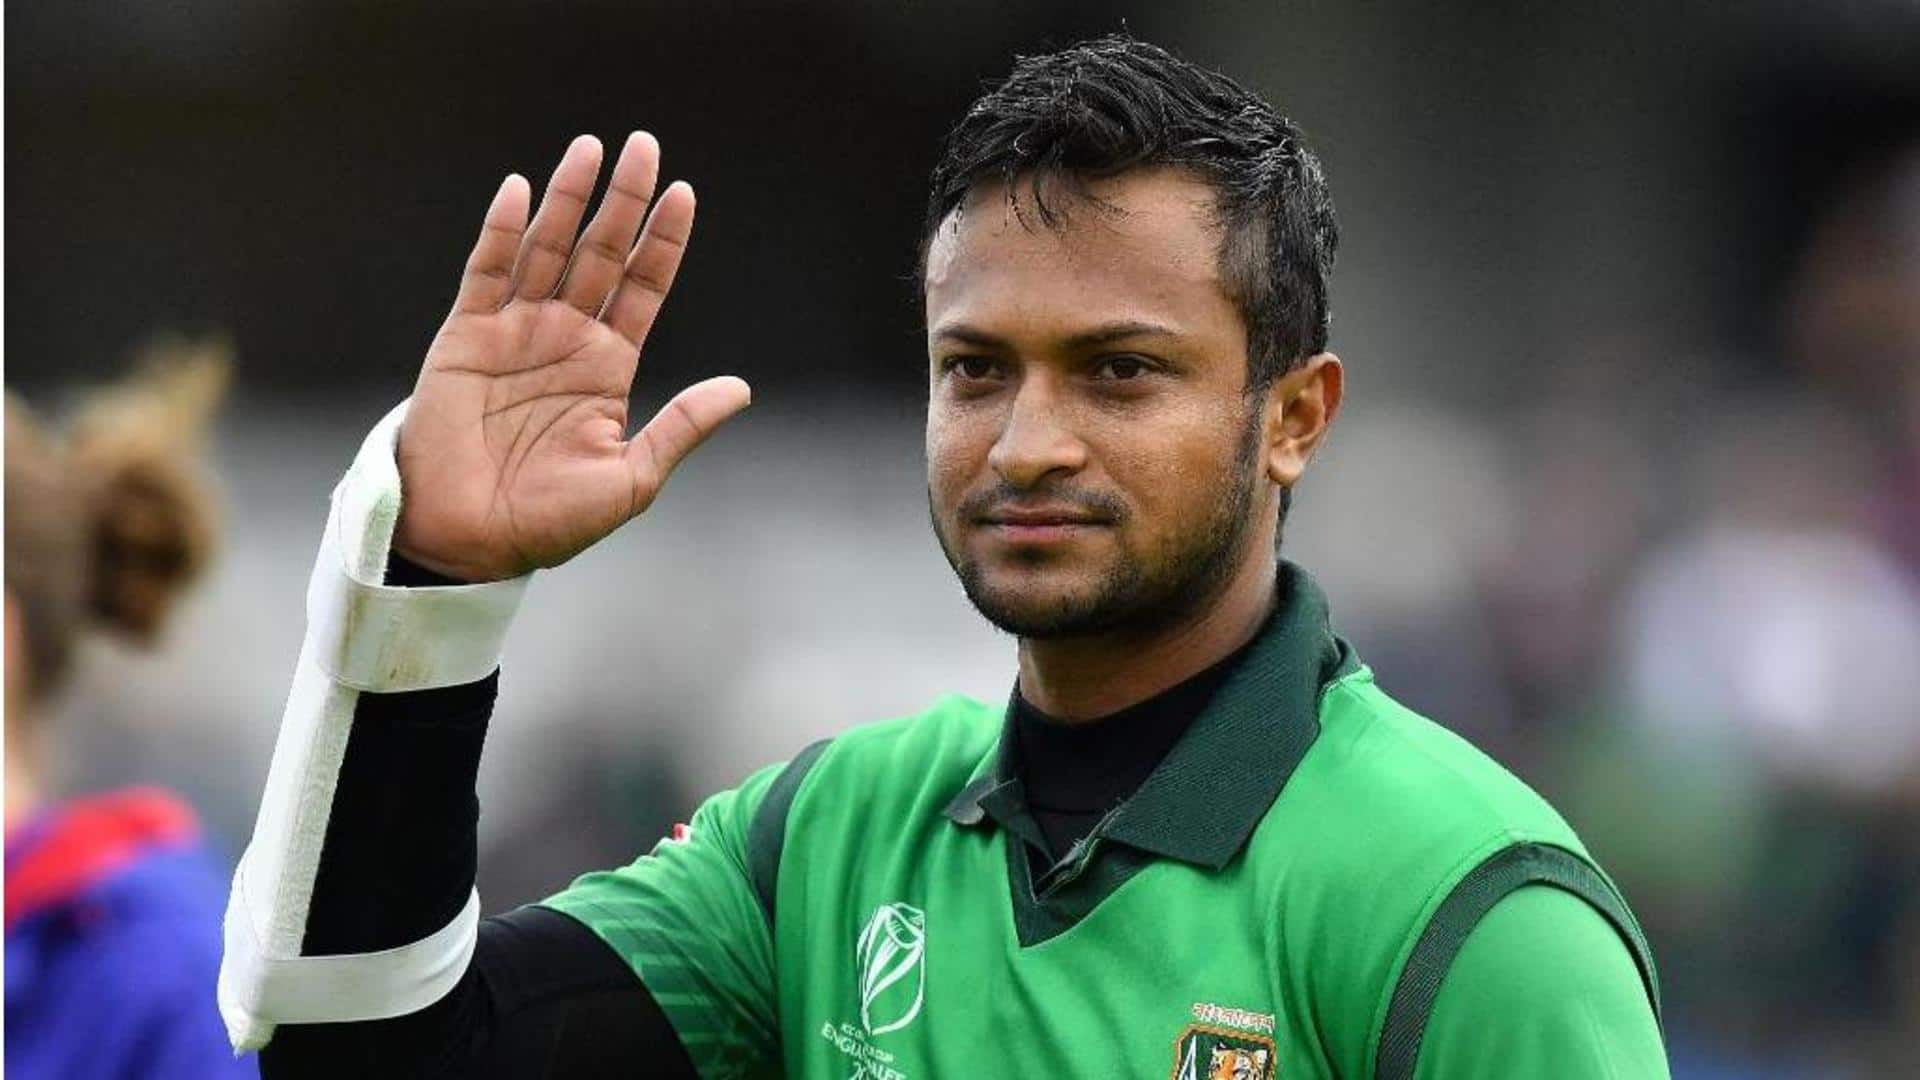 Will Shakib Al Hasan become Bangladesh's new ODI captain? Details